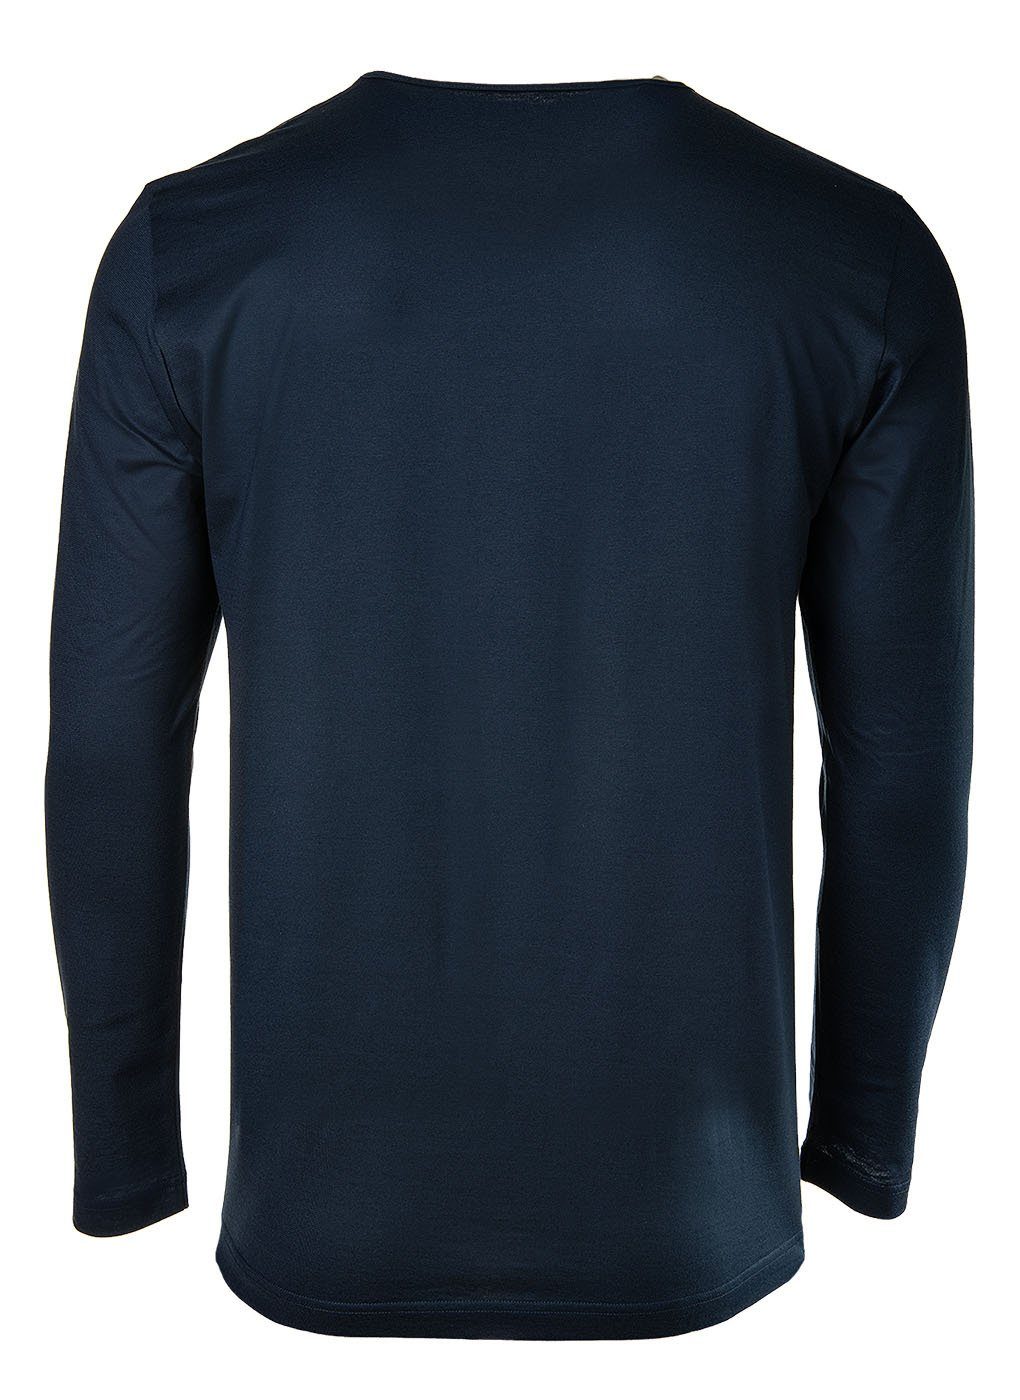 Herren langarm Shirt, Marine Sweatshirt 1/1 Novila Rundhals, Loungewear, -